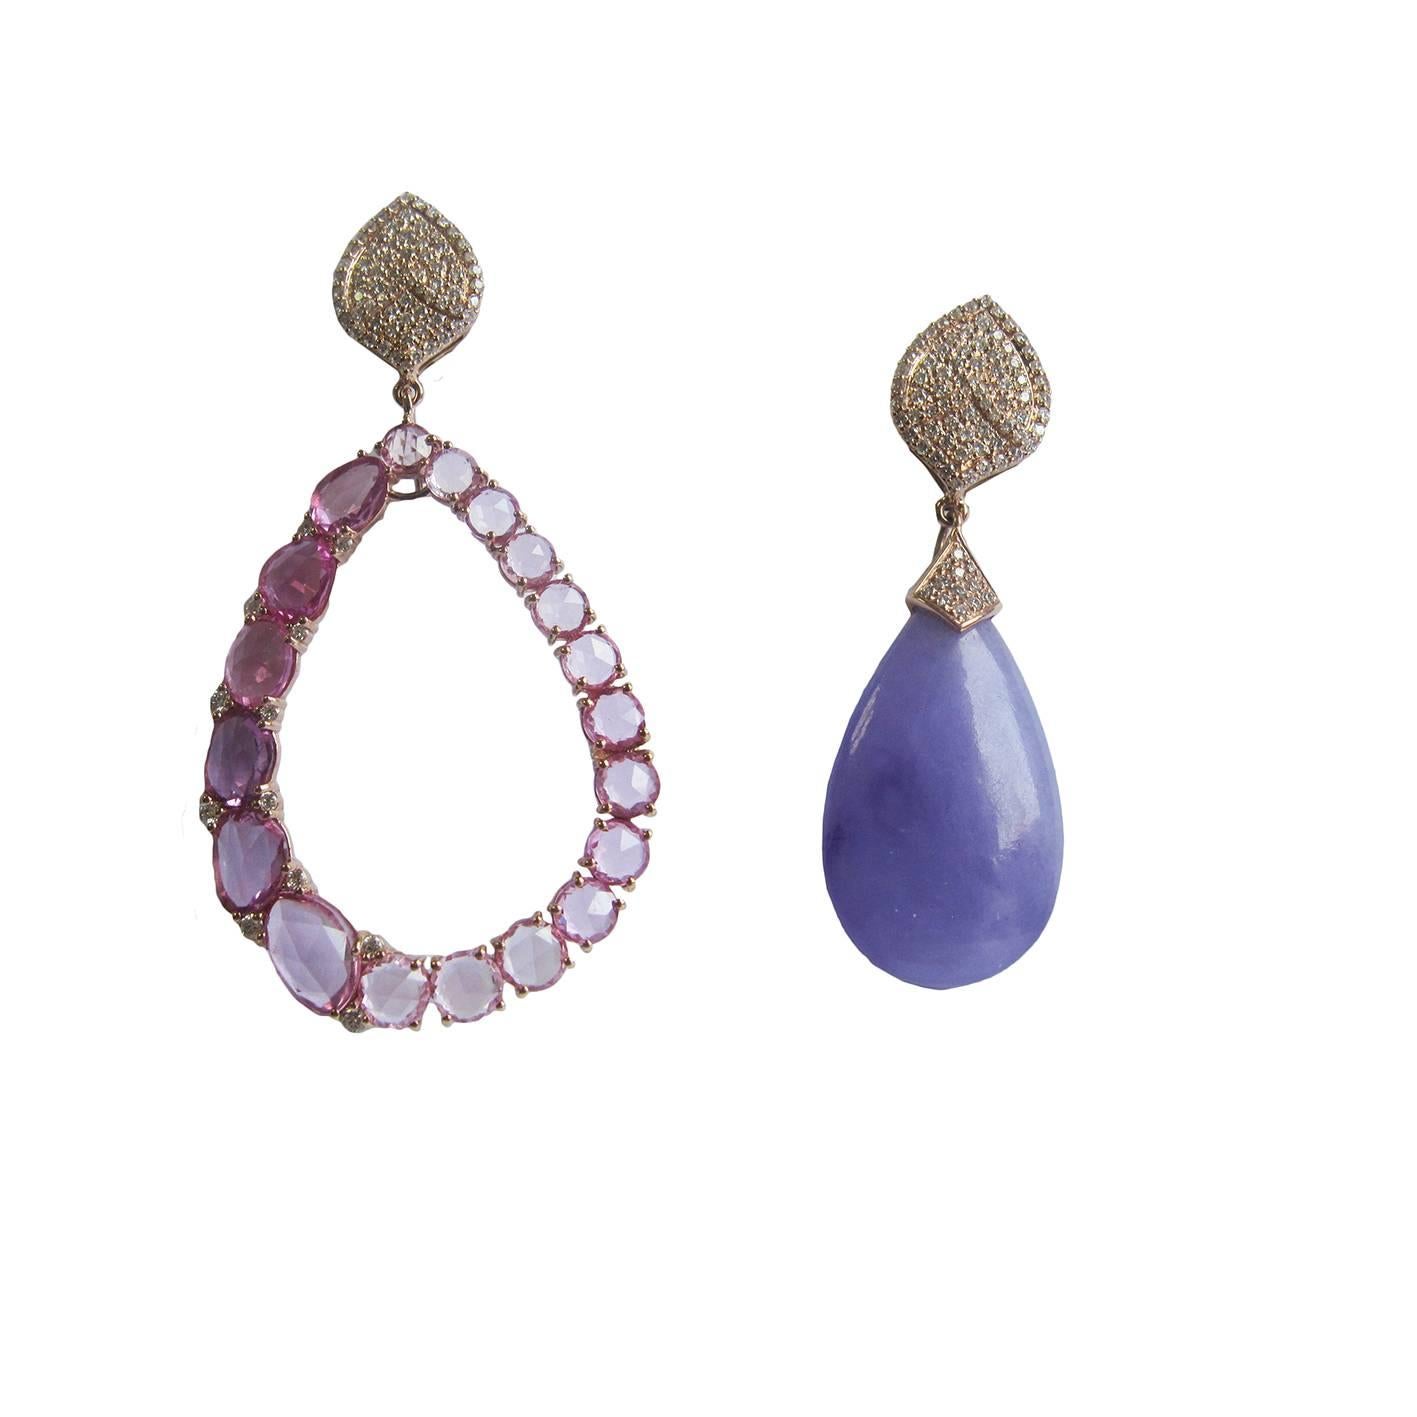 Custom Rainbow Earrings, Irregular and Round Sapphires 
Pink Sapphires: 18.80 ct
Diamonds: 1.55 ct
Lavande Jade Drops